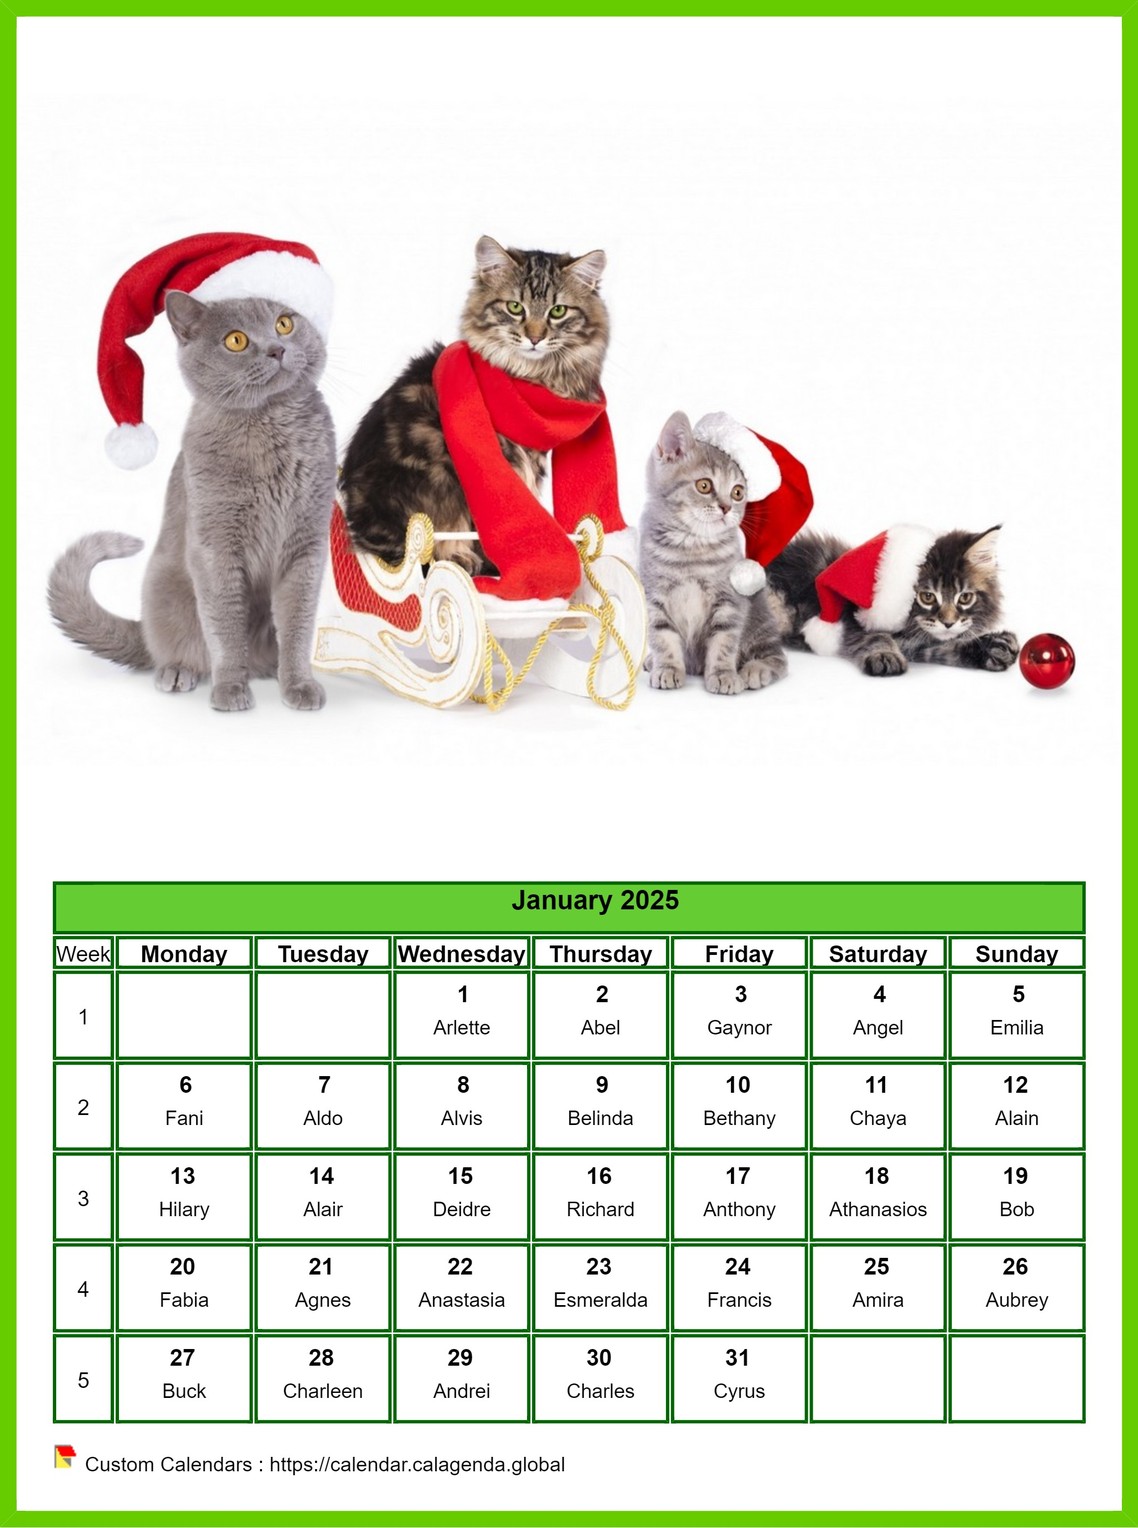 Calendar January 2025 cats